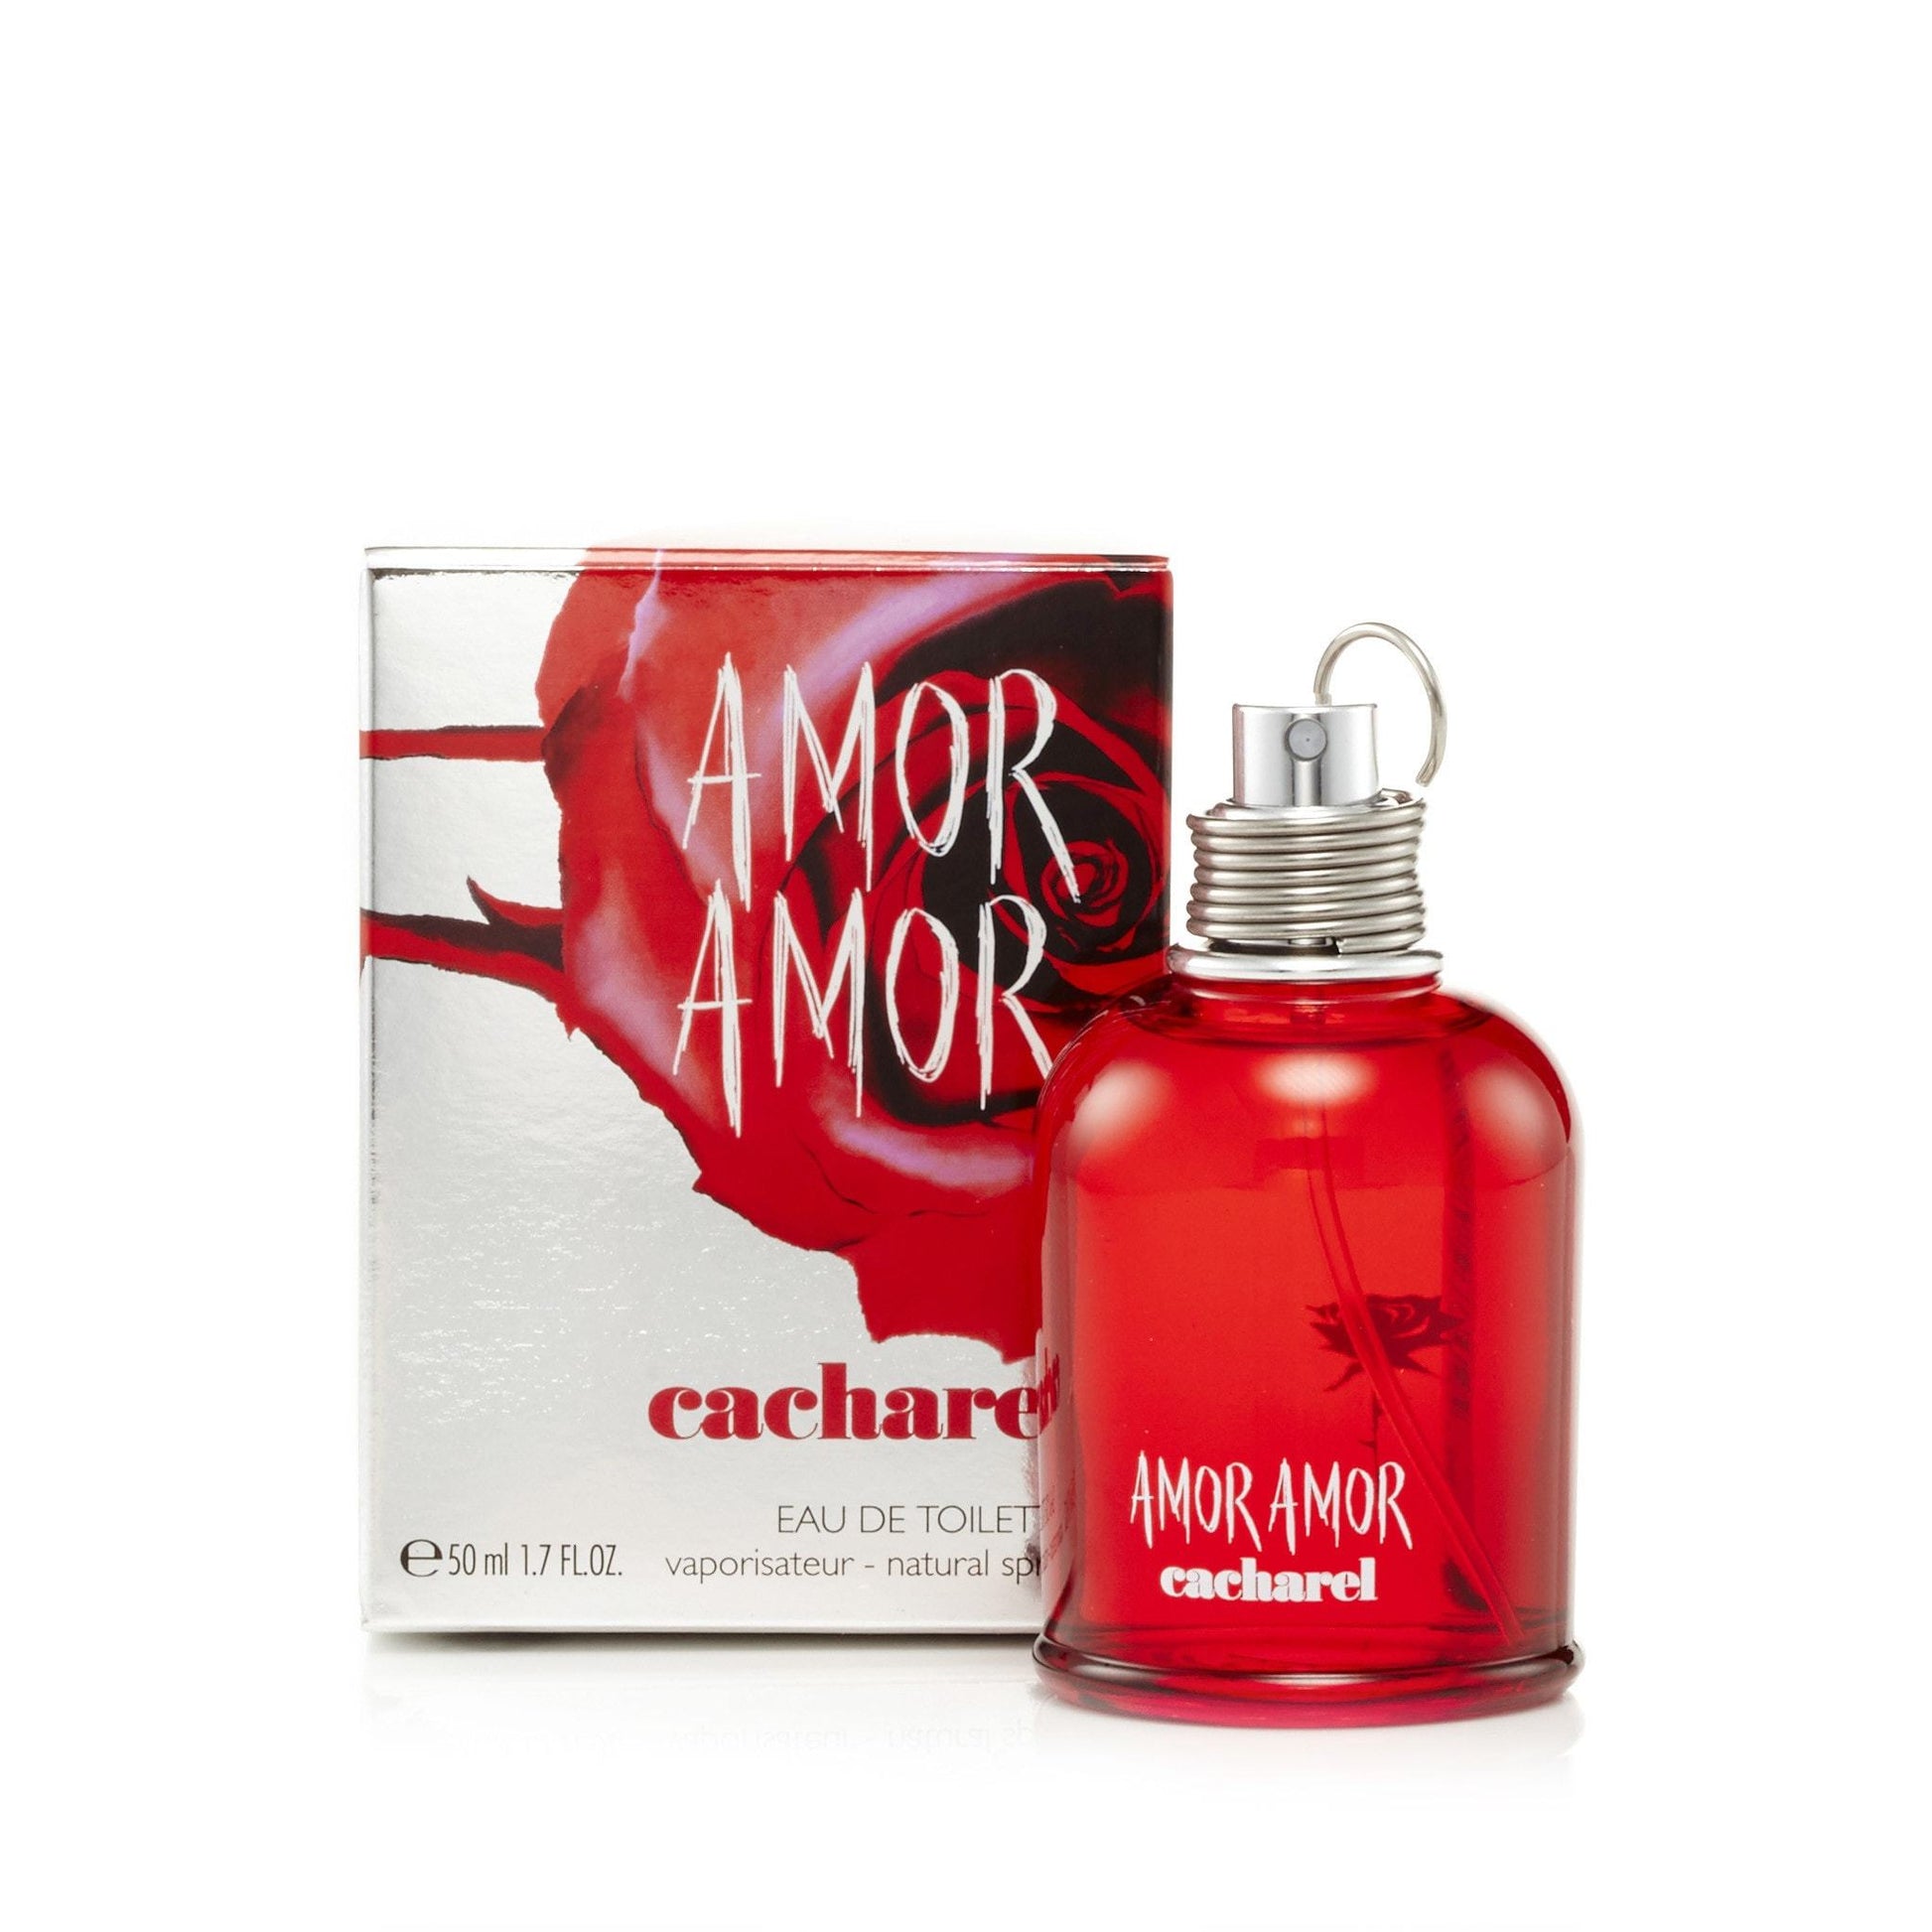 Amor Amor Eau de Toilette Spray for Women by Cacharel, Product image 5